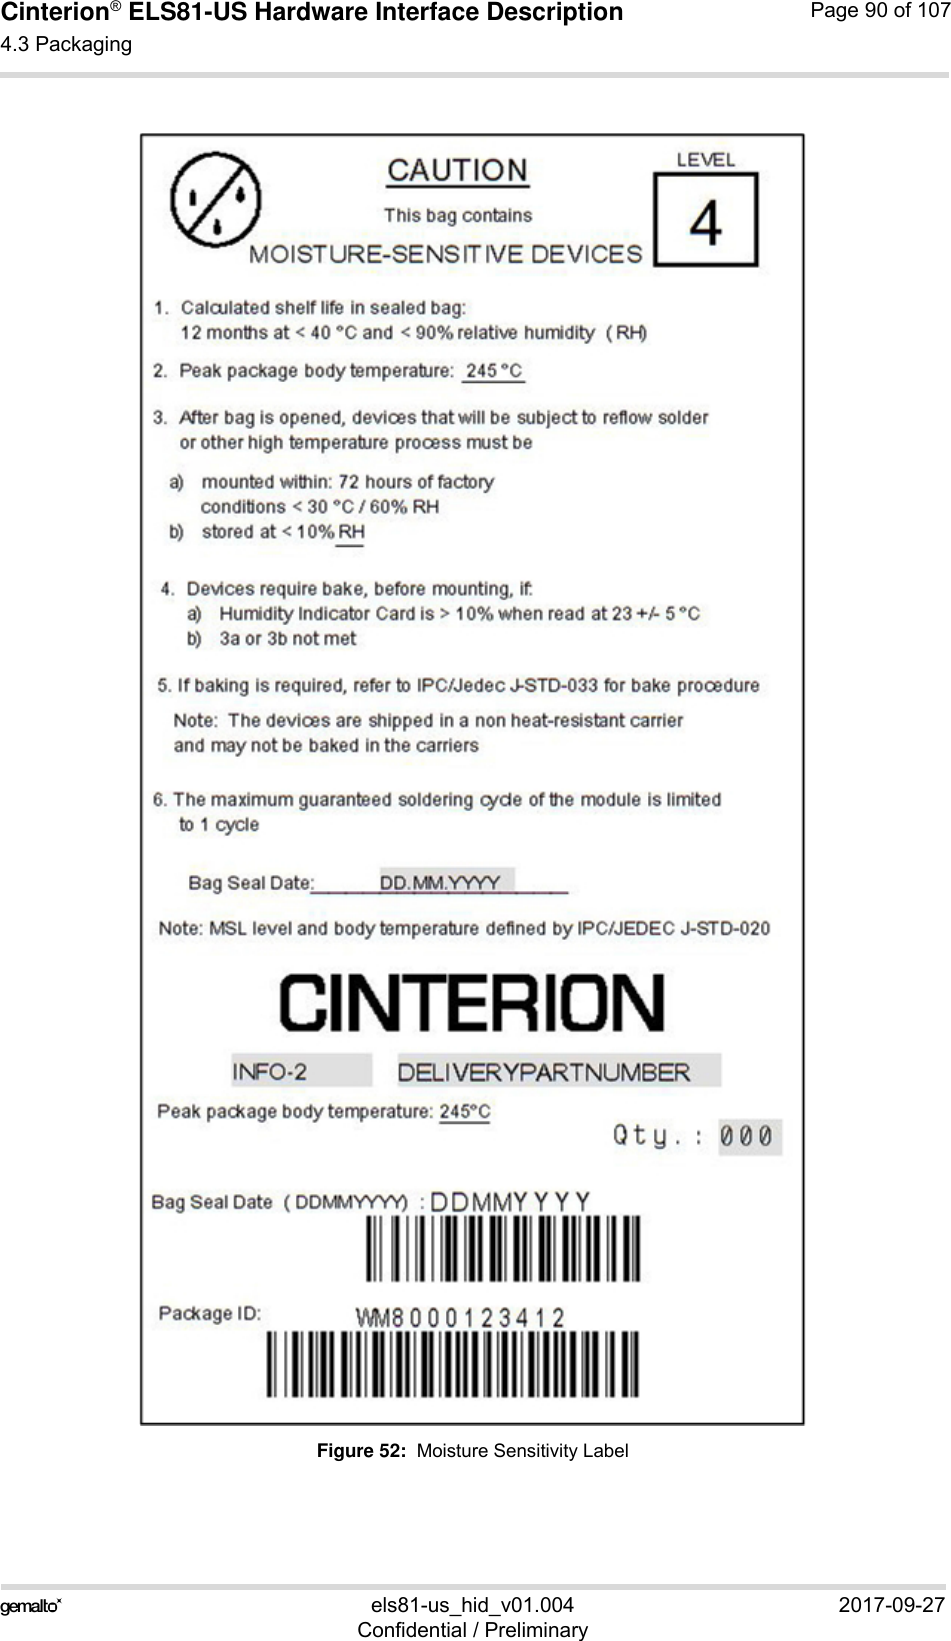 Cinterion® ELS81-US Hardware Interface Description4.3 Packaging92els81-us_hid_v01.004 2017-09-27Confidential / PreliminaryPage 90 of 107Figure 52:  Moisture Sensitivity Label